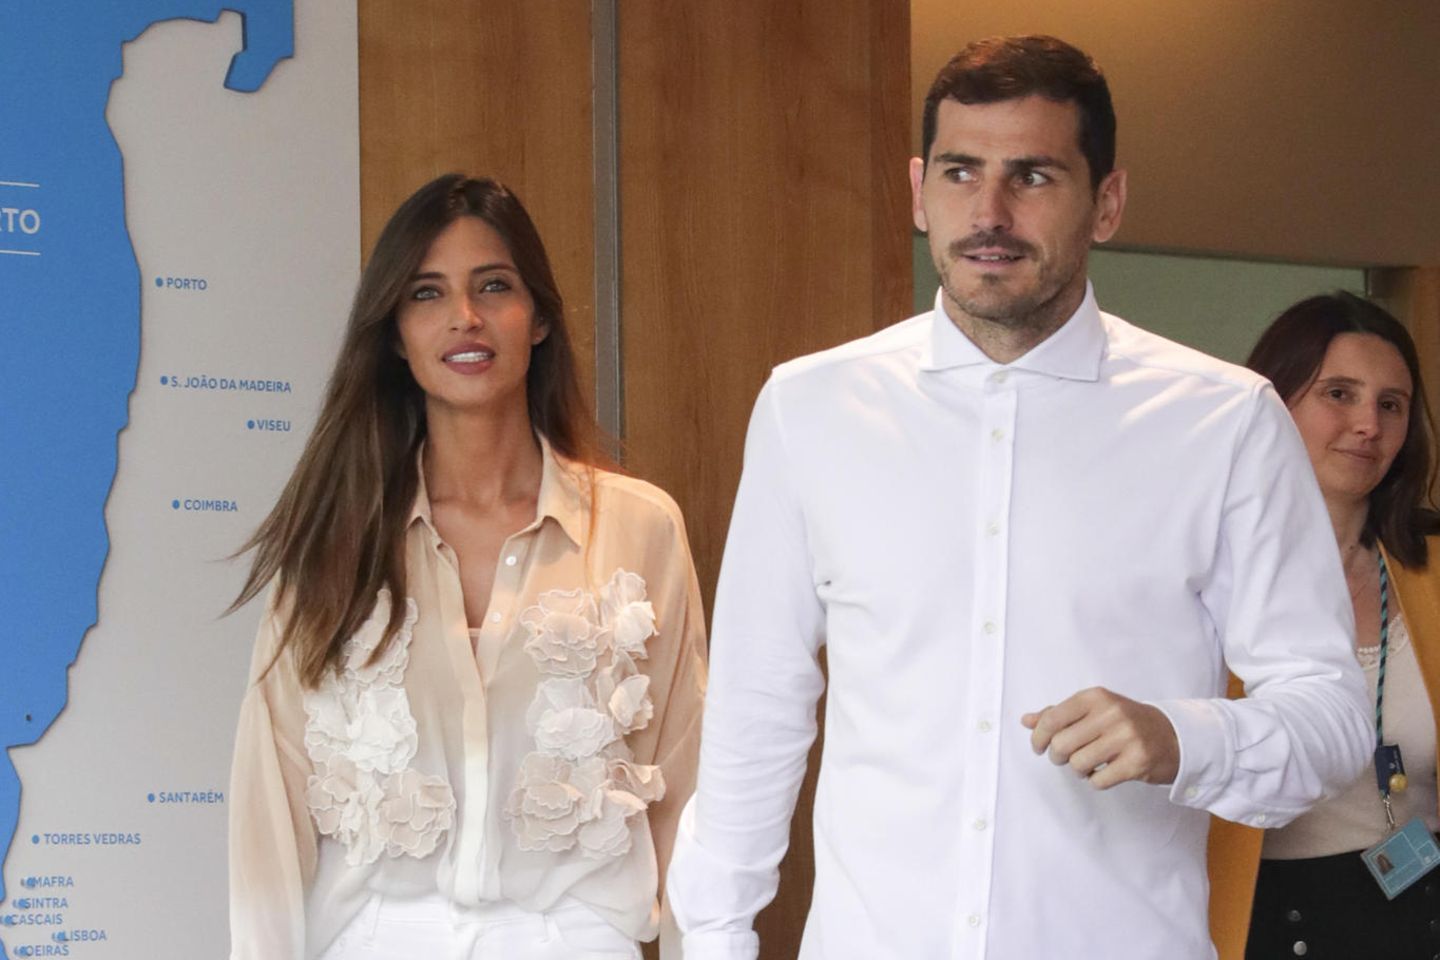 Sara Carbonero + Iker Casillas